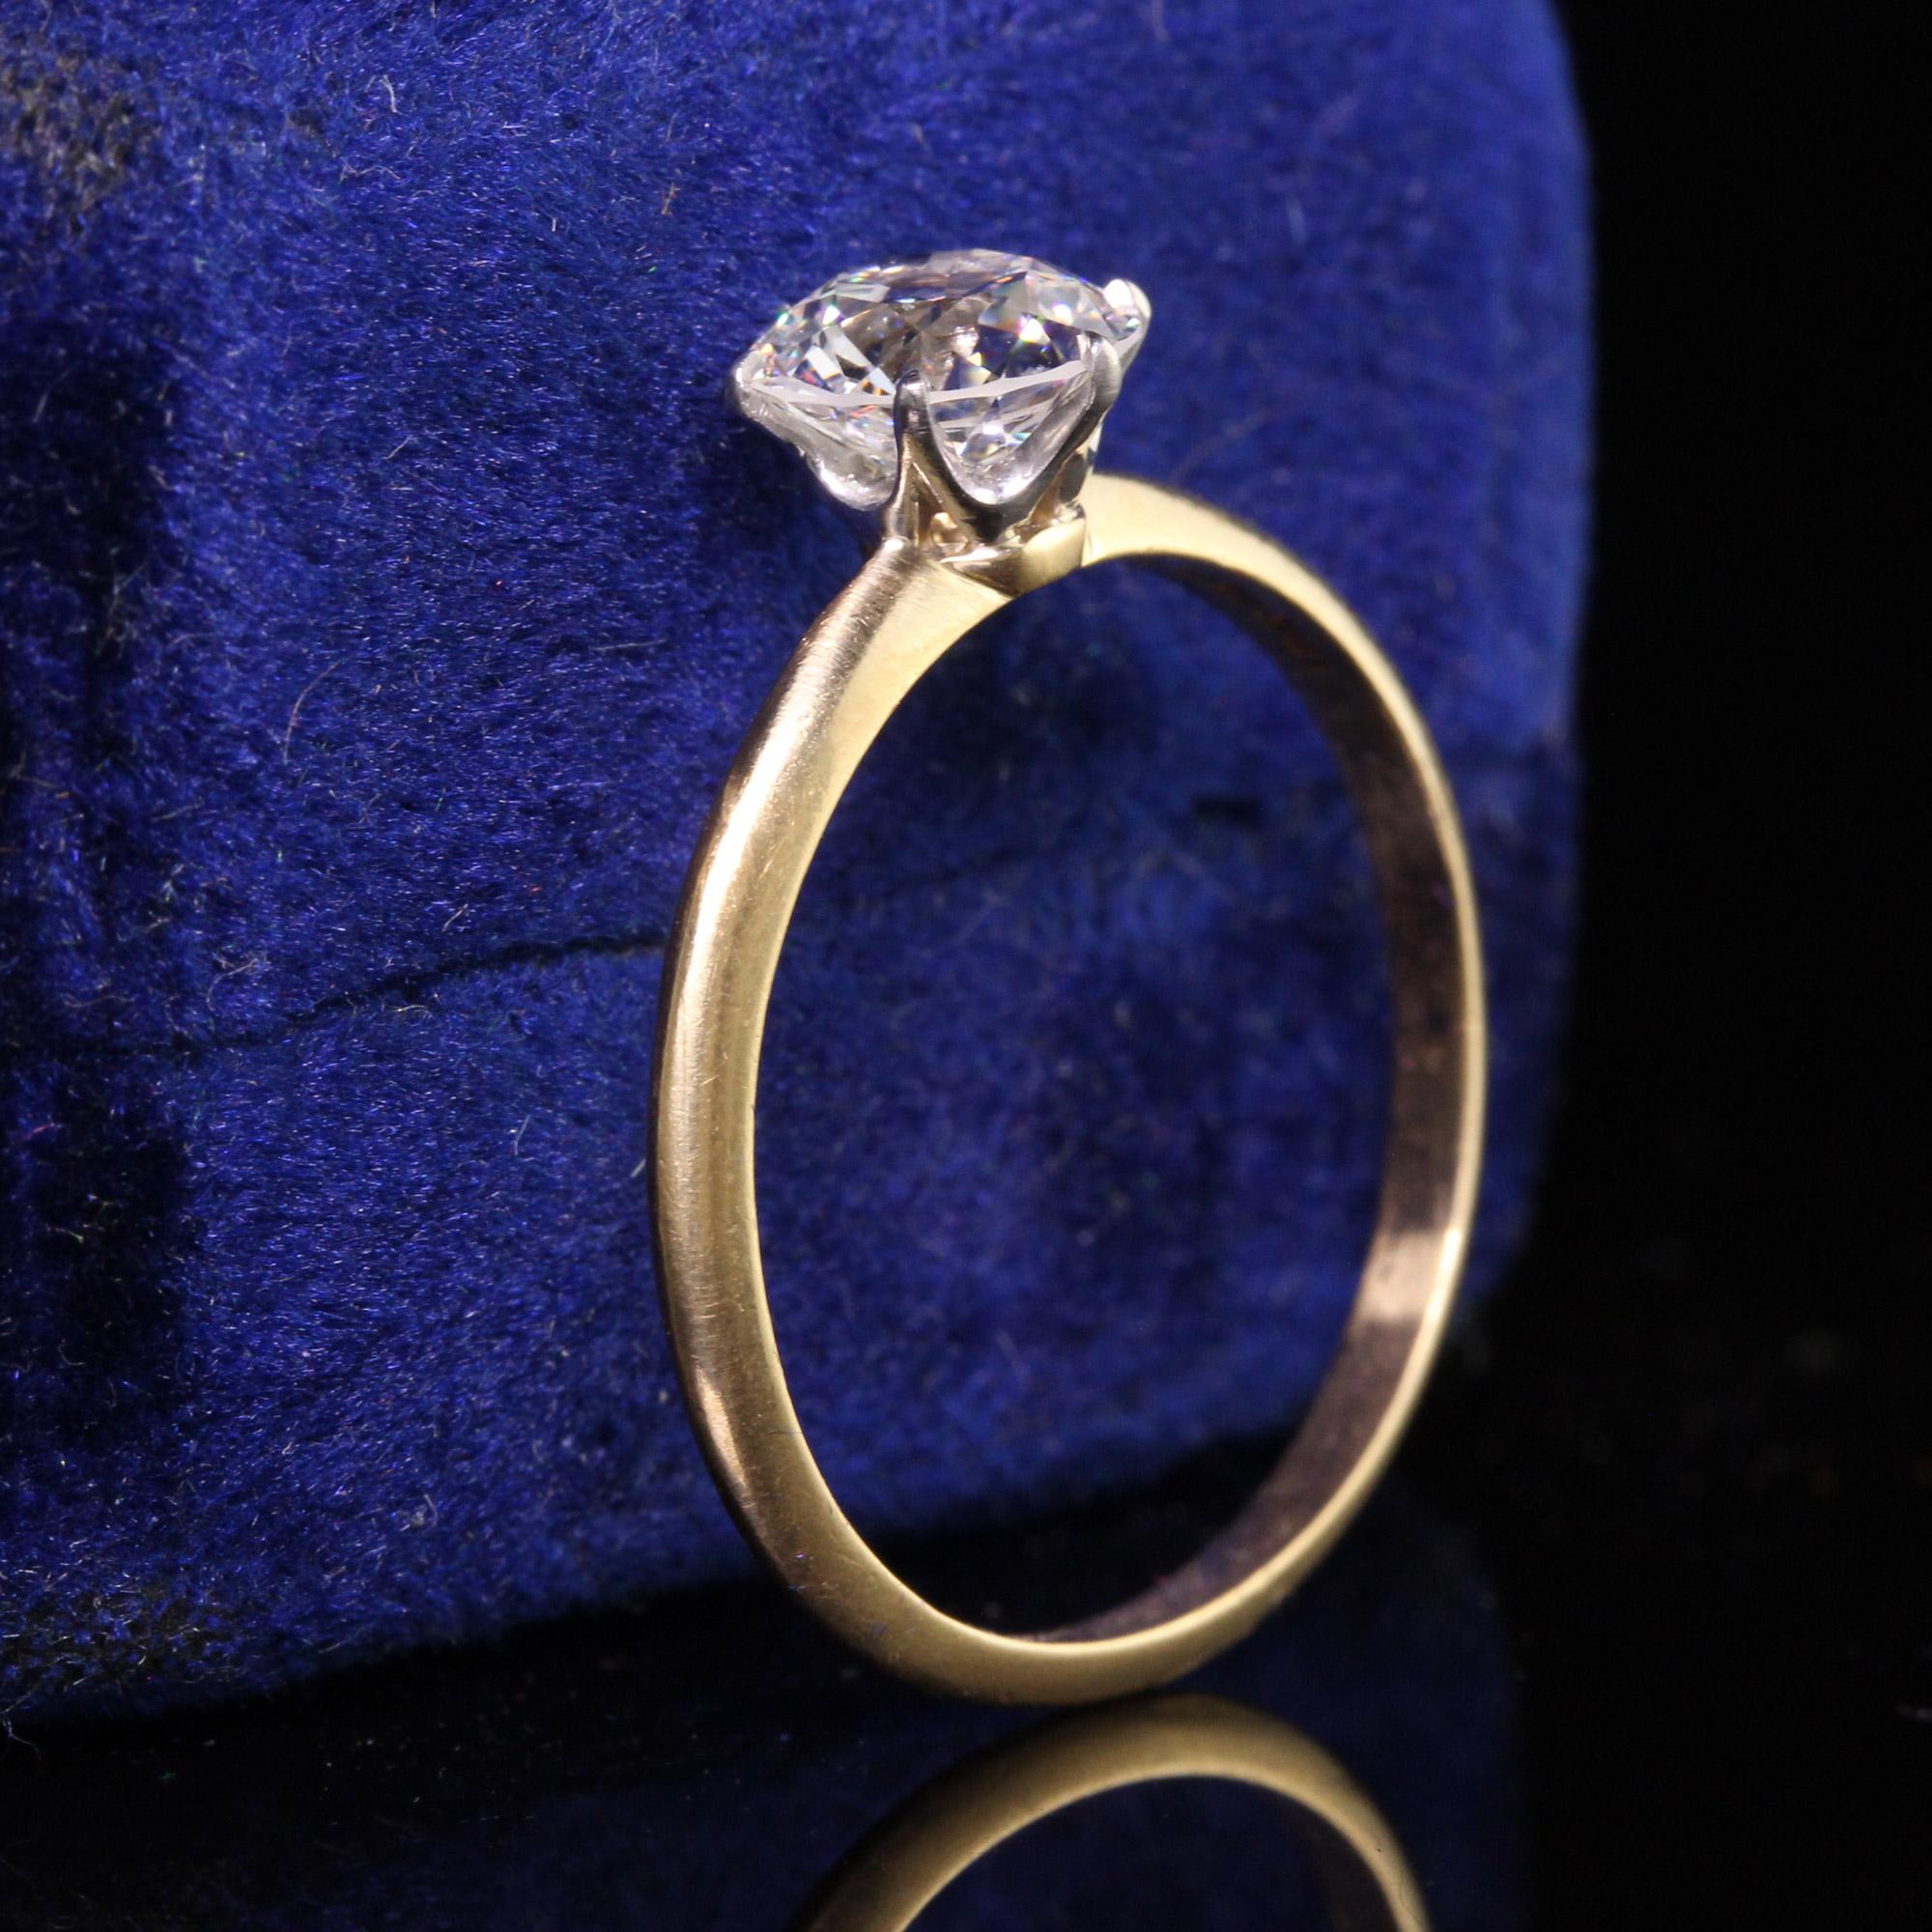 eleanor roosevelt engagement ring